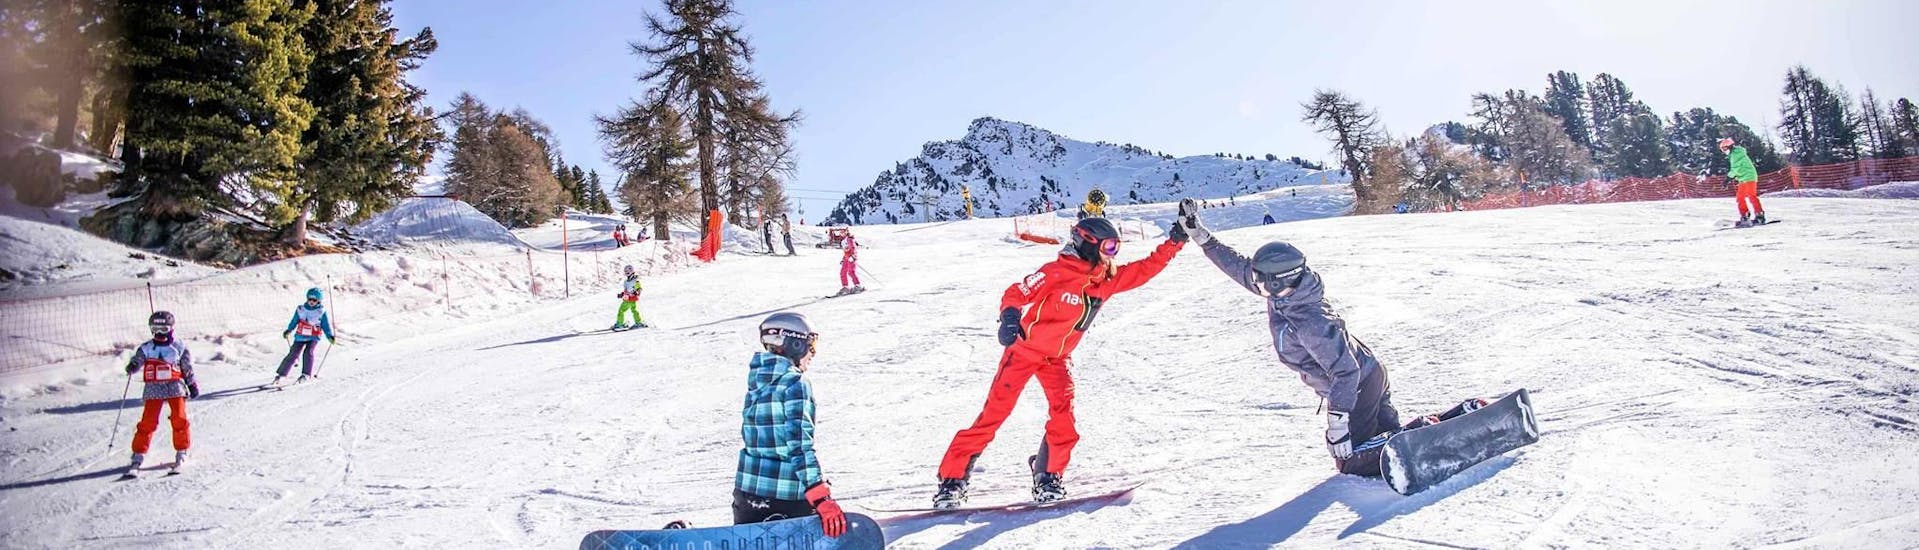 snowboarding-lessons-neige-aventure-hero